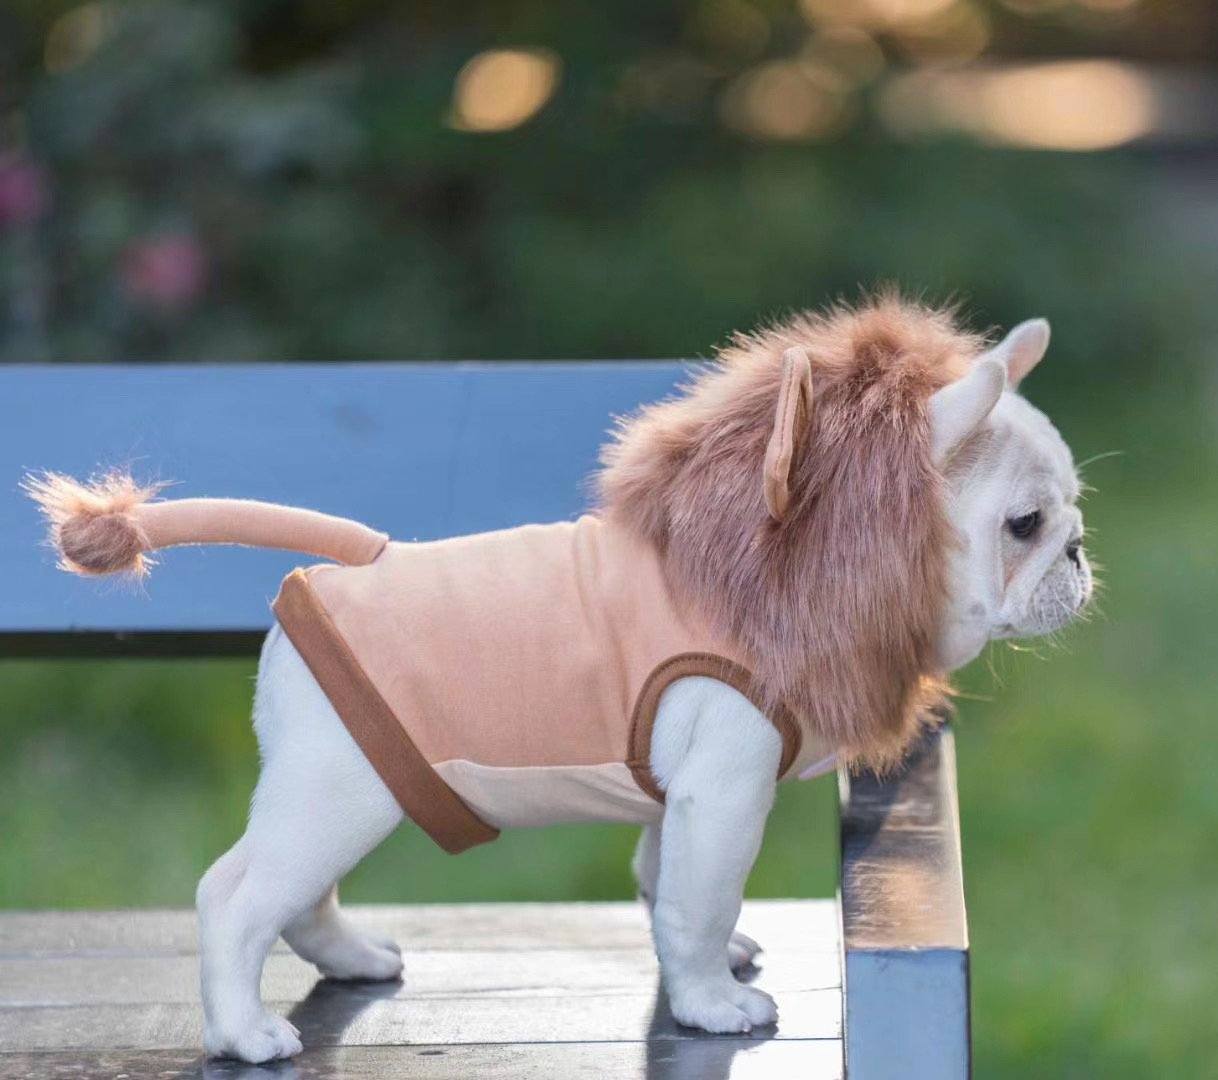 french bulldog lion costume - Frenchiely